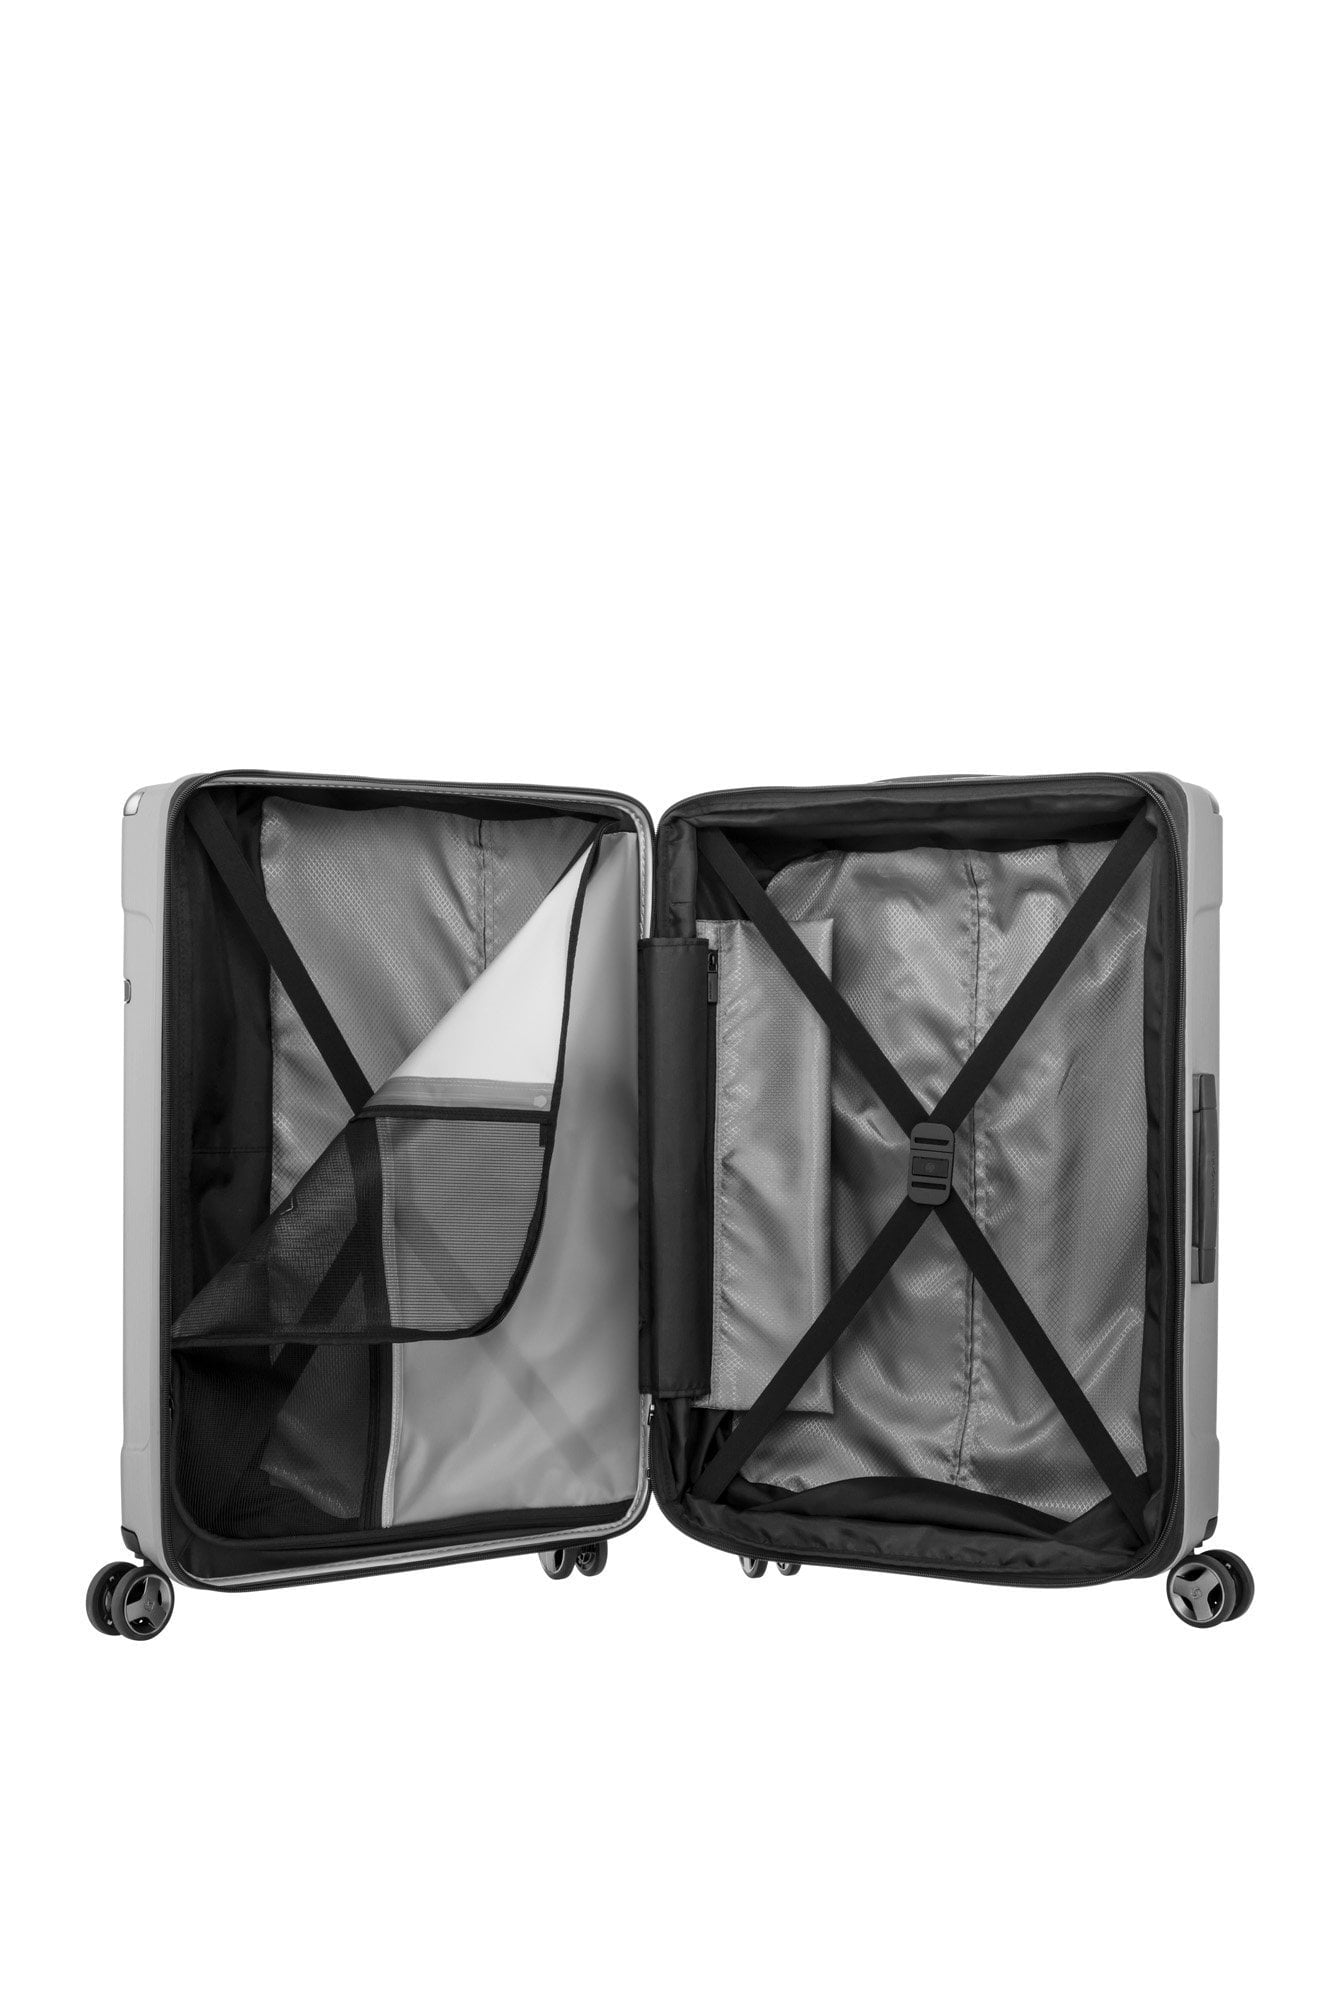 Samsonite Evoa Spinner Carry-On Widebody Luggage